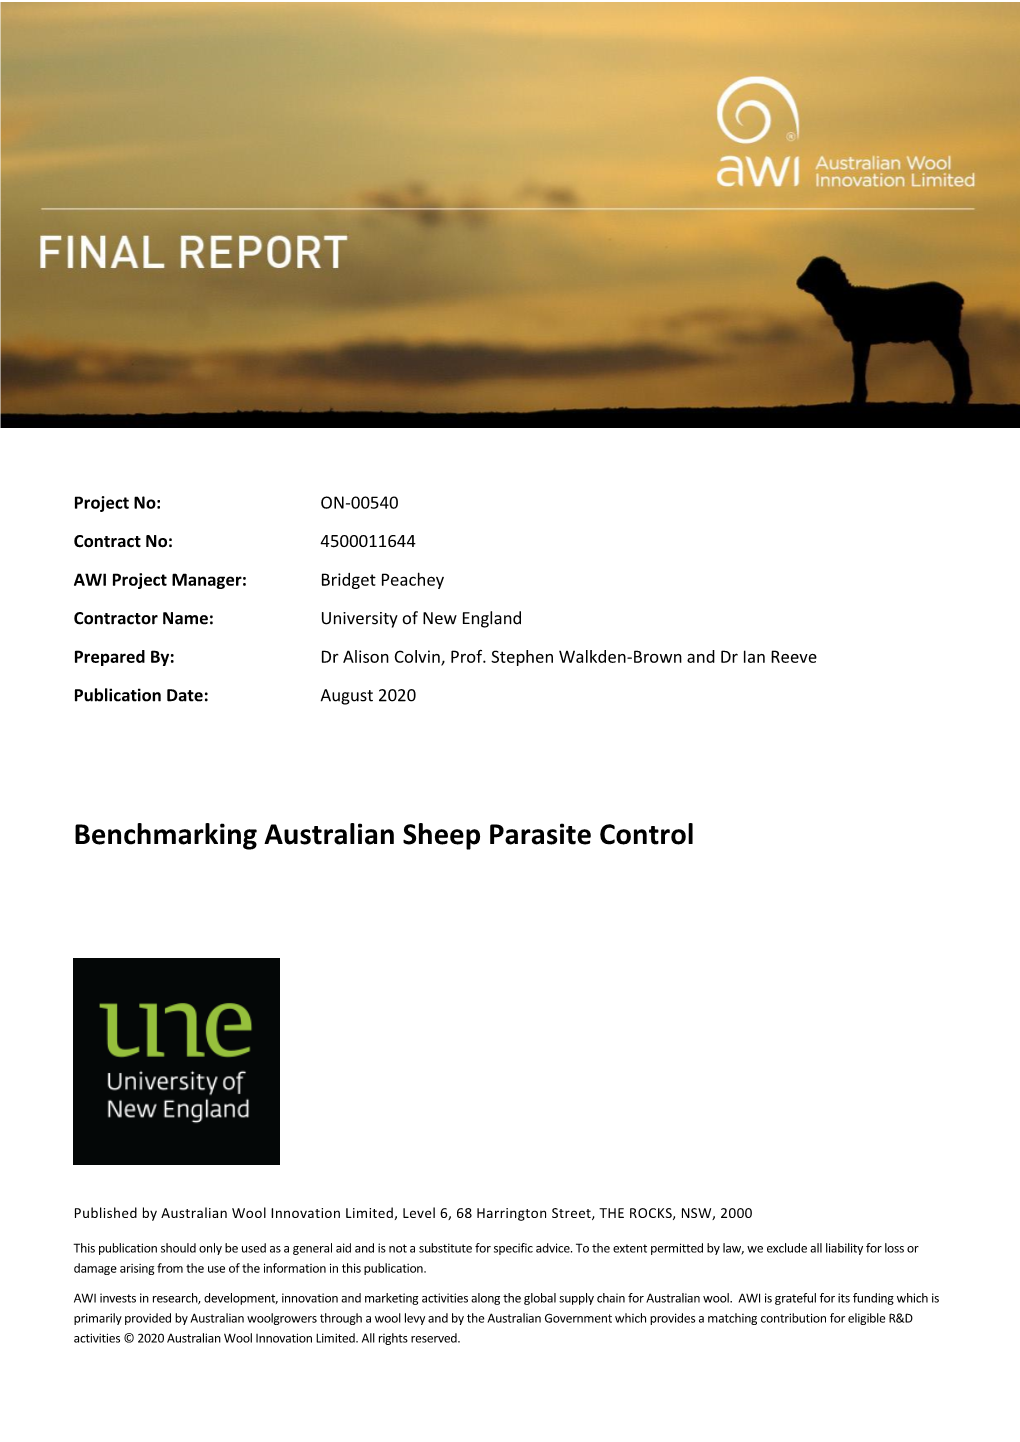 Benchmarking Australian Sheep Parasite Control